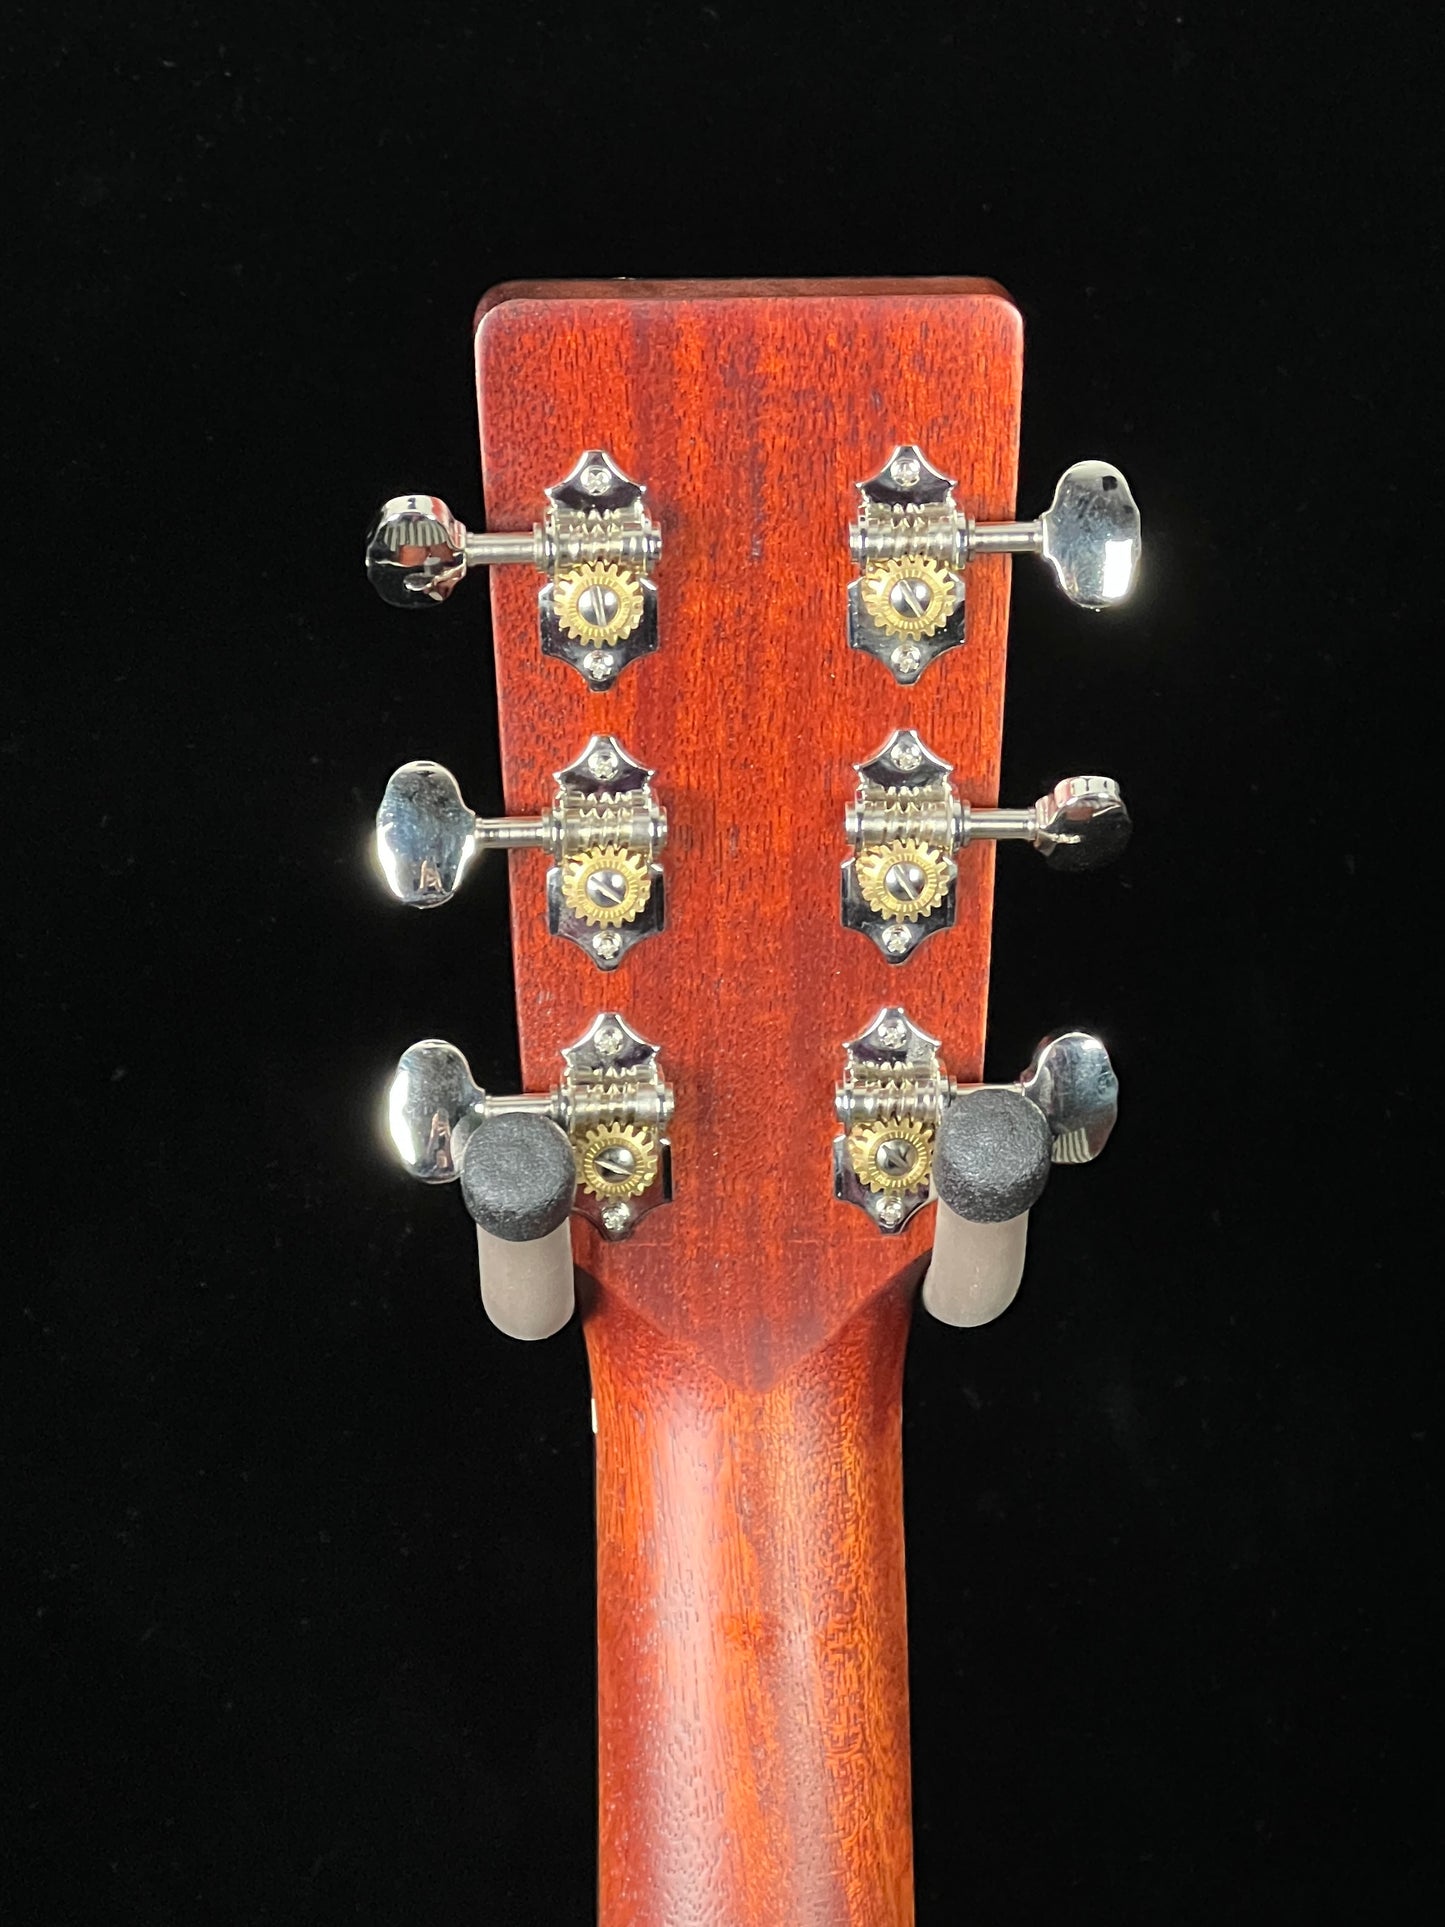 Eastman E2D Cedar and Sapele Dreadnought Acoustic Guitar - New